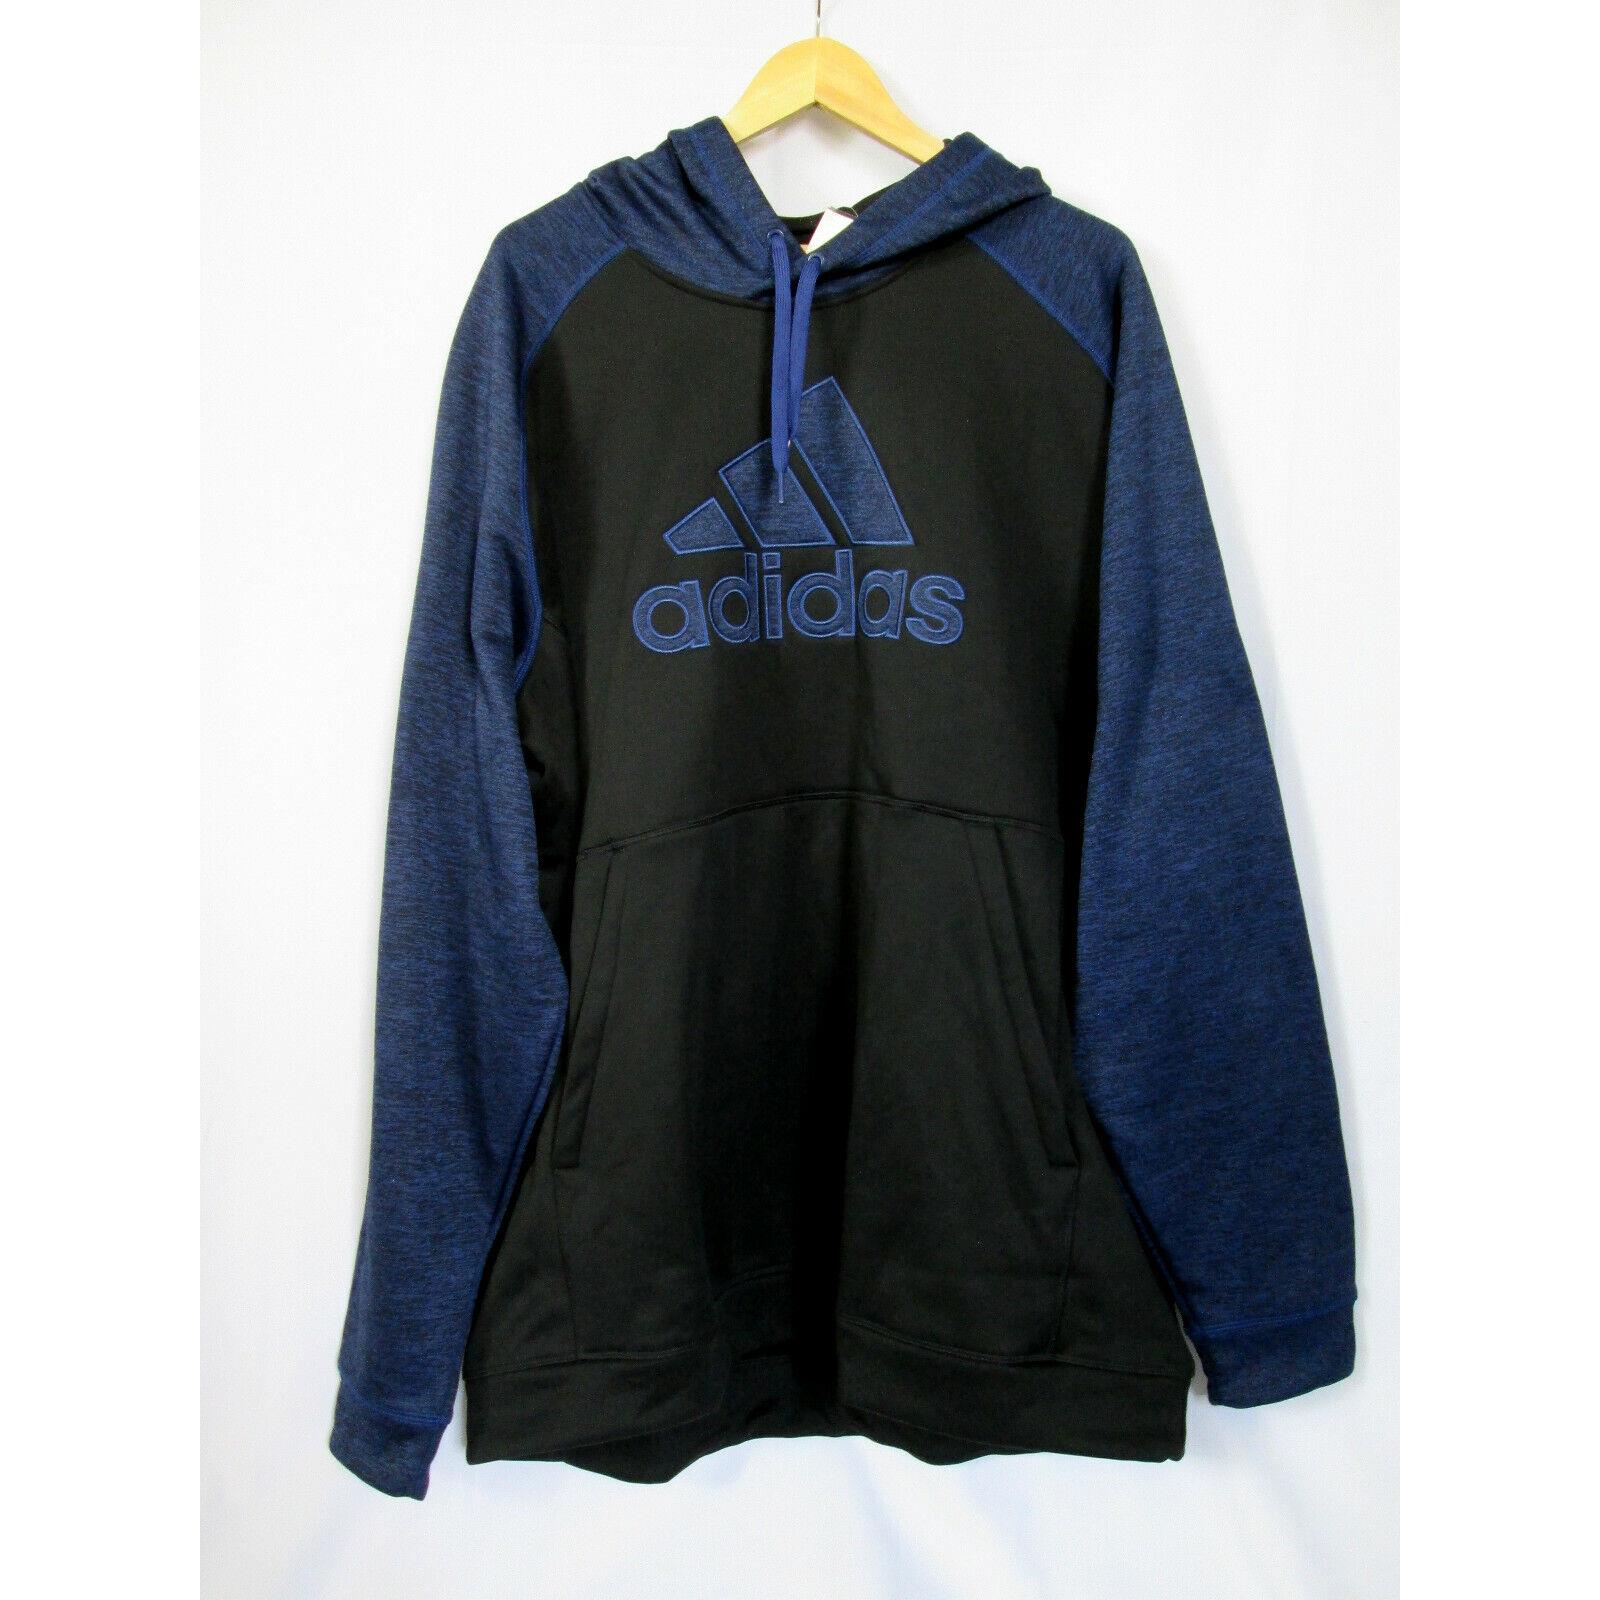 Adidas 3XLT Blue/black TI Climawarm Fleece Lined Pullover Hoodie Sweatshirt